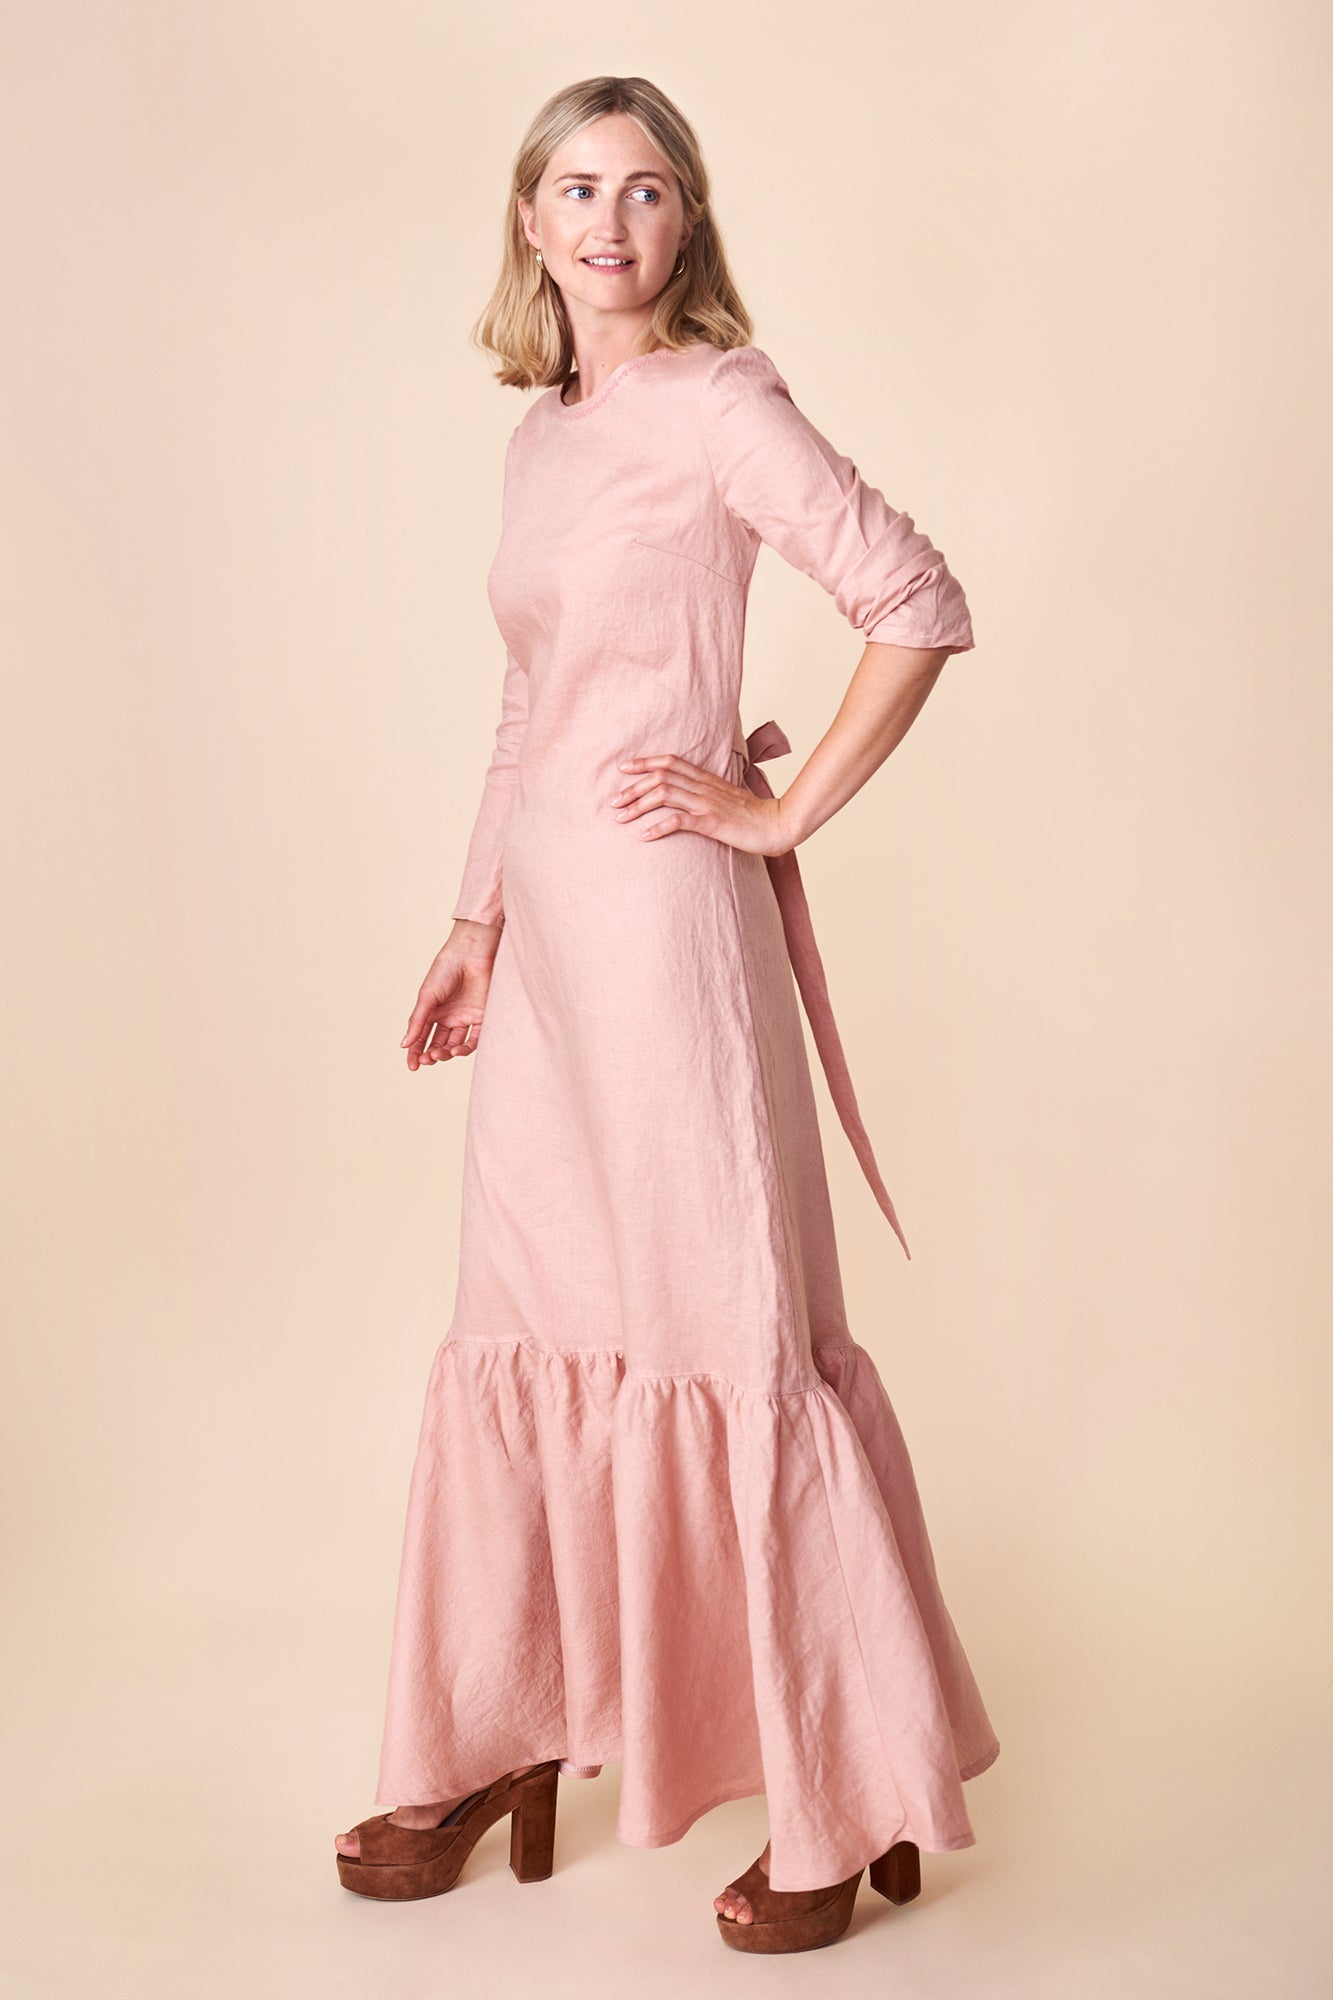 Rose Pink Triple Crepe Dressmaking Fabric | Fabrics Galore